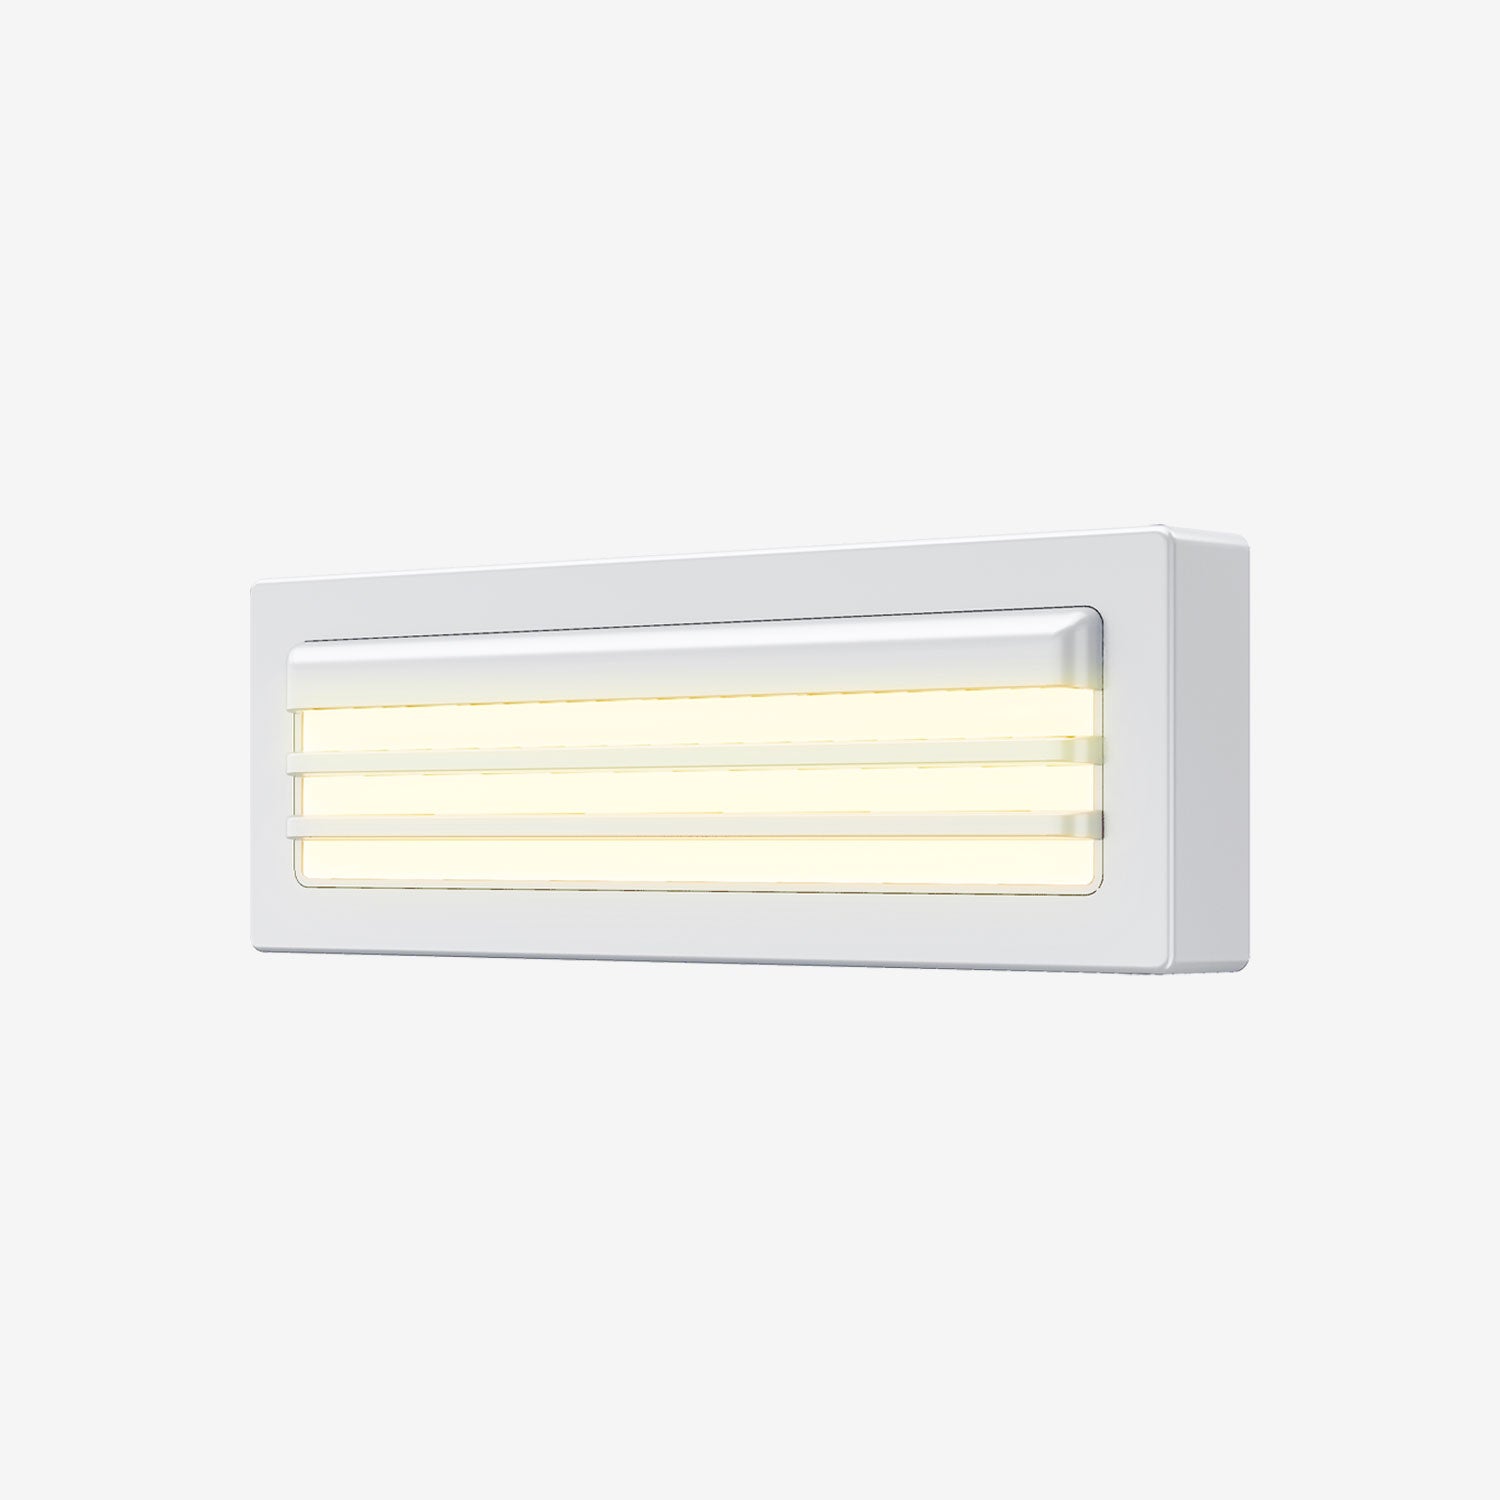 Luminaria LED para sobreponer en muro arbotante, de uso en exterior Modelo ML-7406 Illux